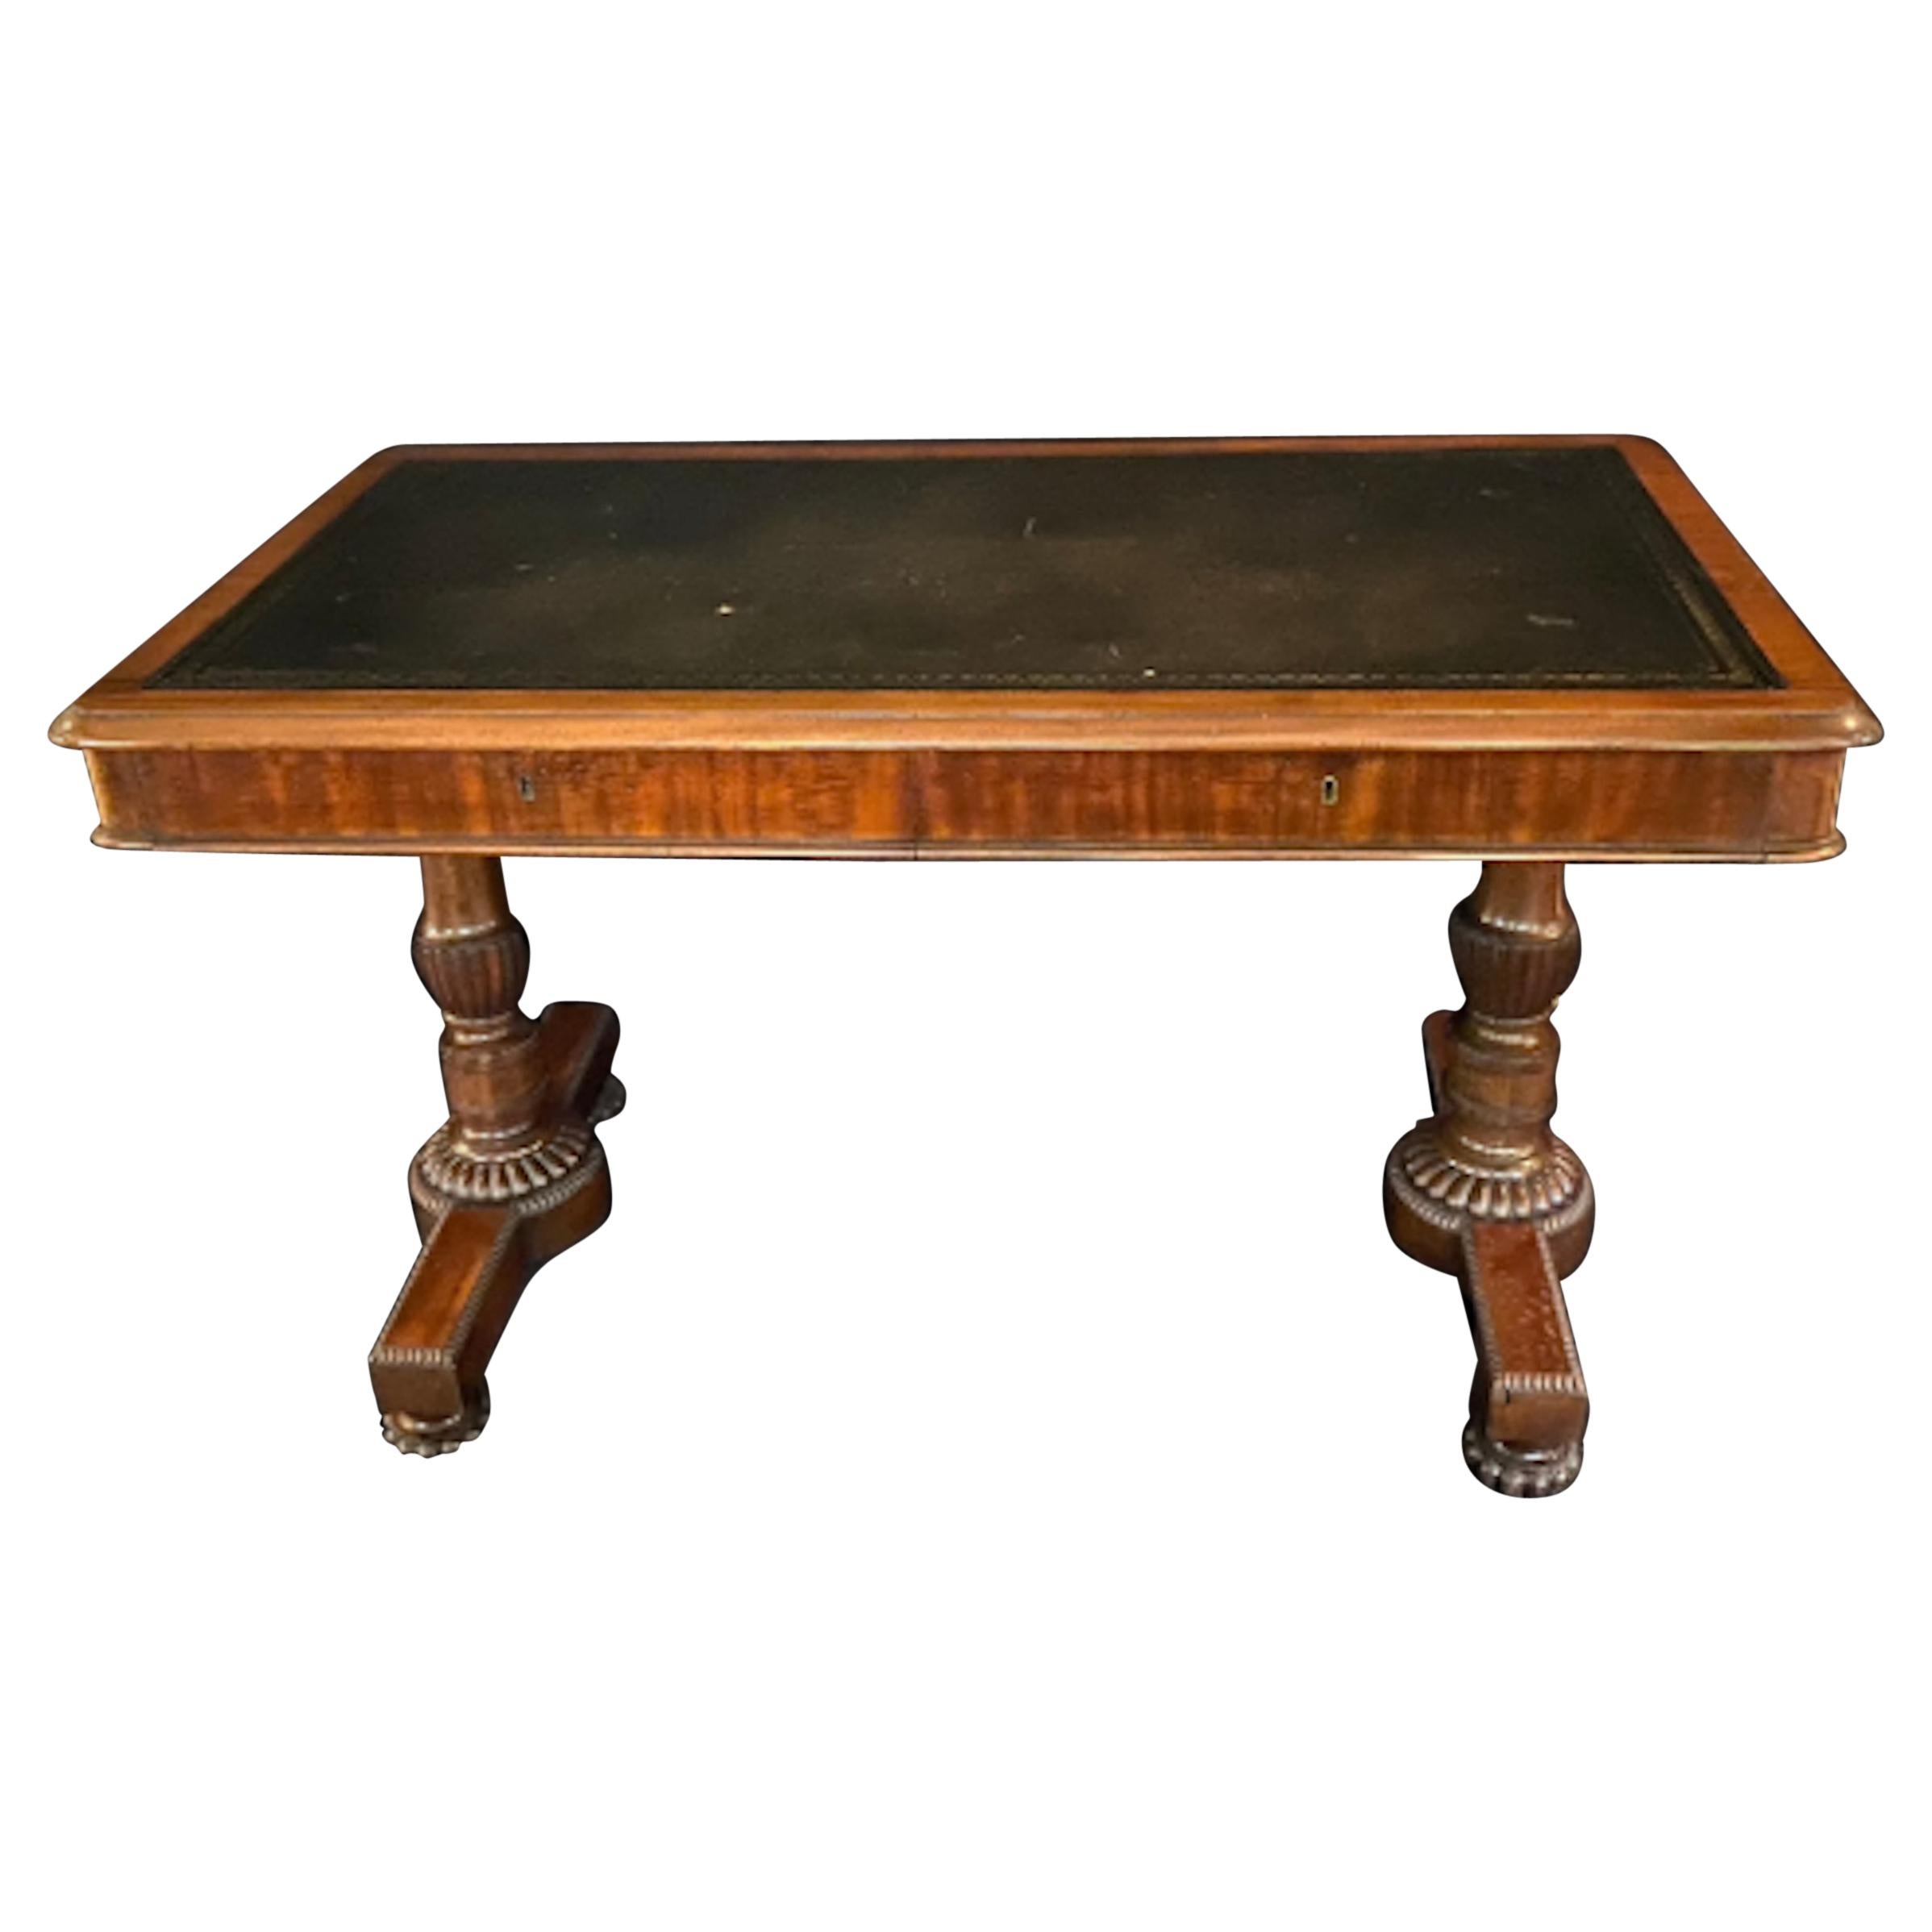 Leather Topped Regency Rectangular Mahogany Pedestal Table